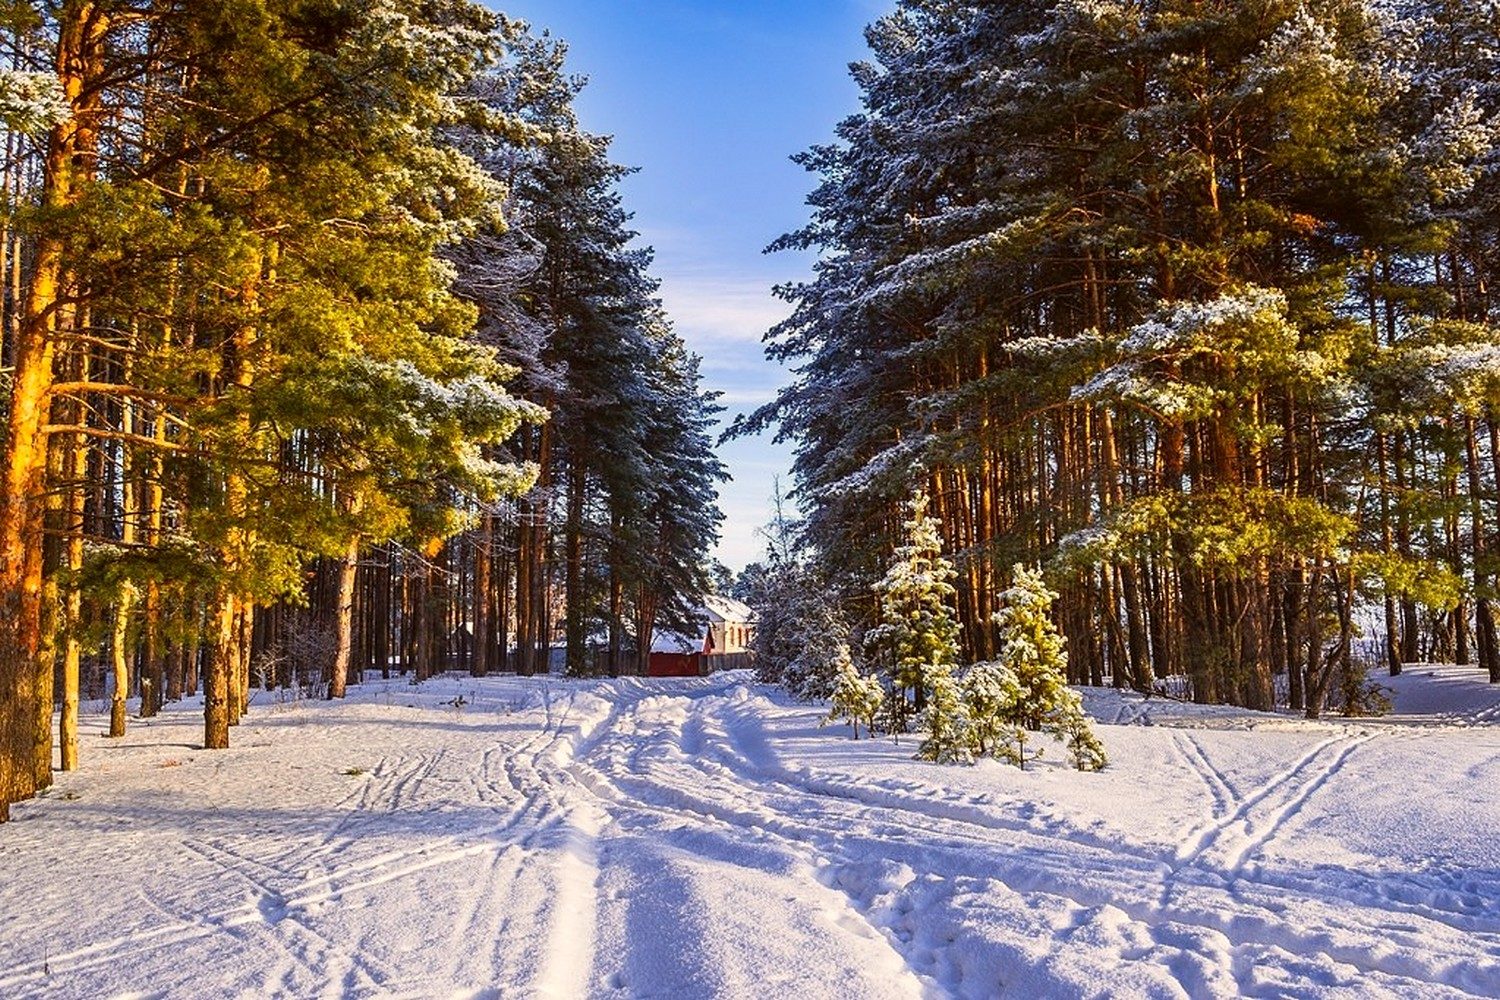  Путешествие в зимний лес - фото 19